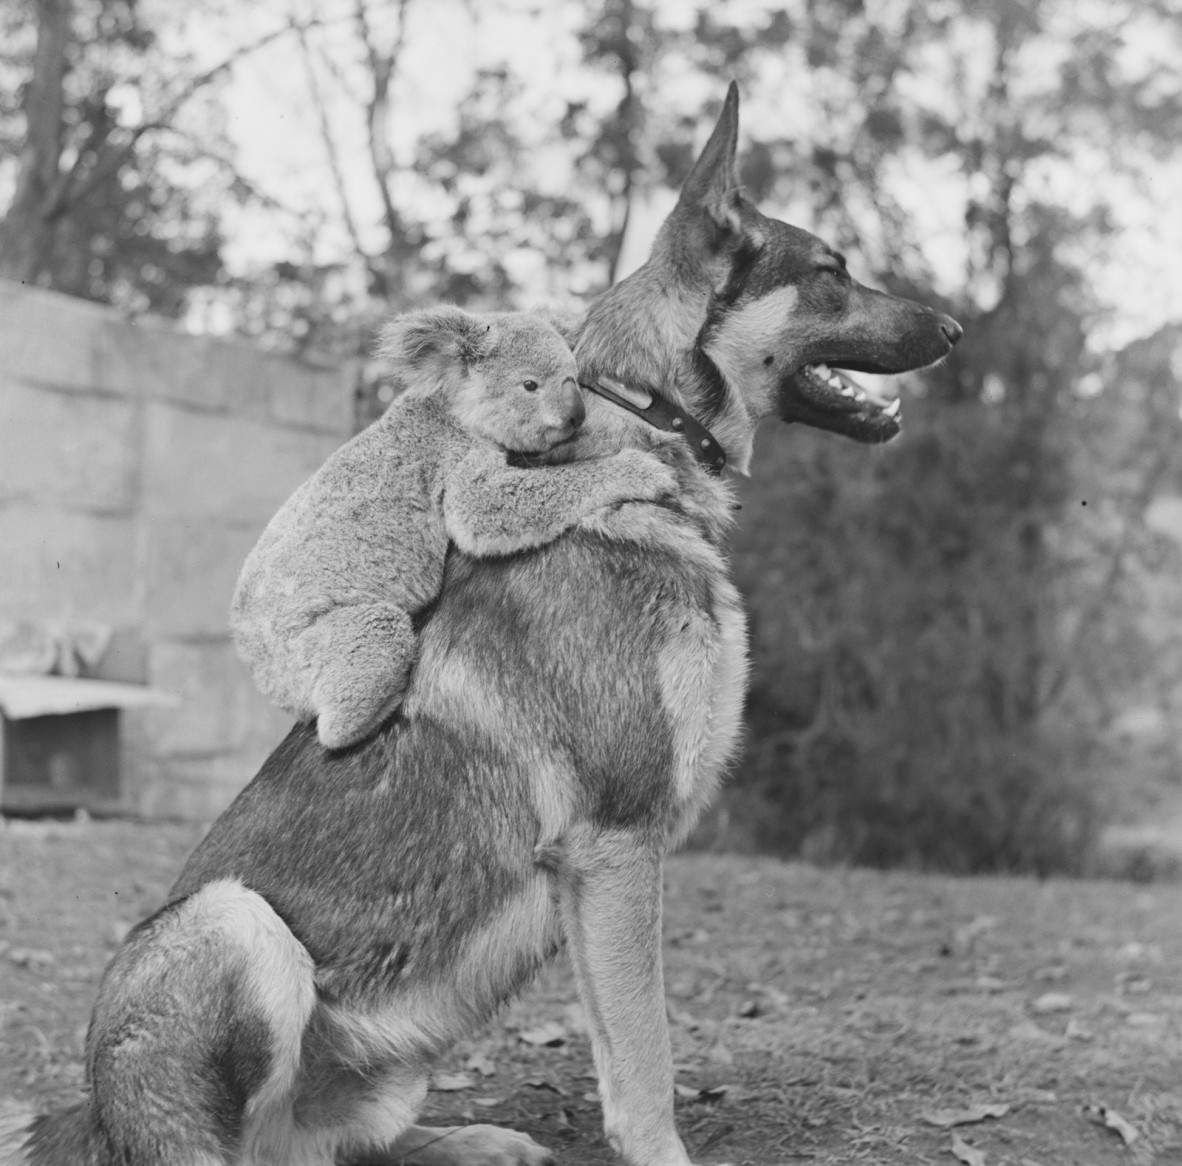 German Shepherd dog carries a Koala on its back 